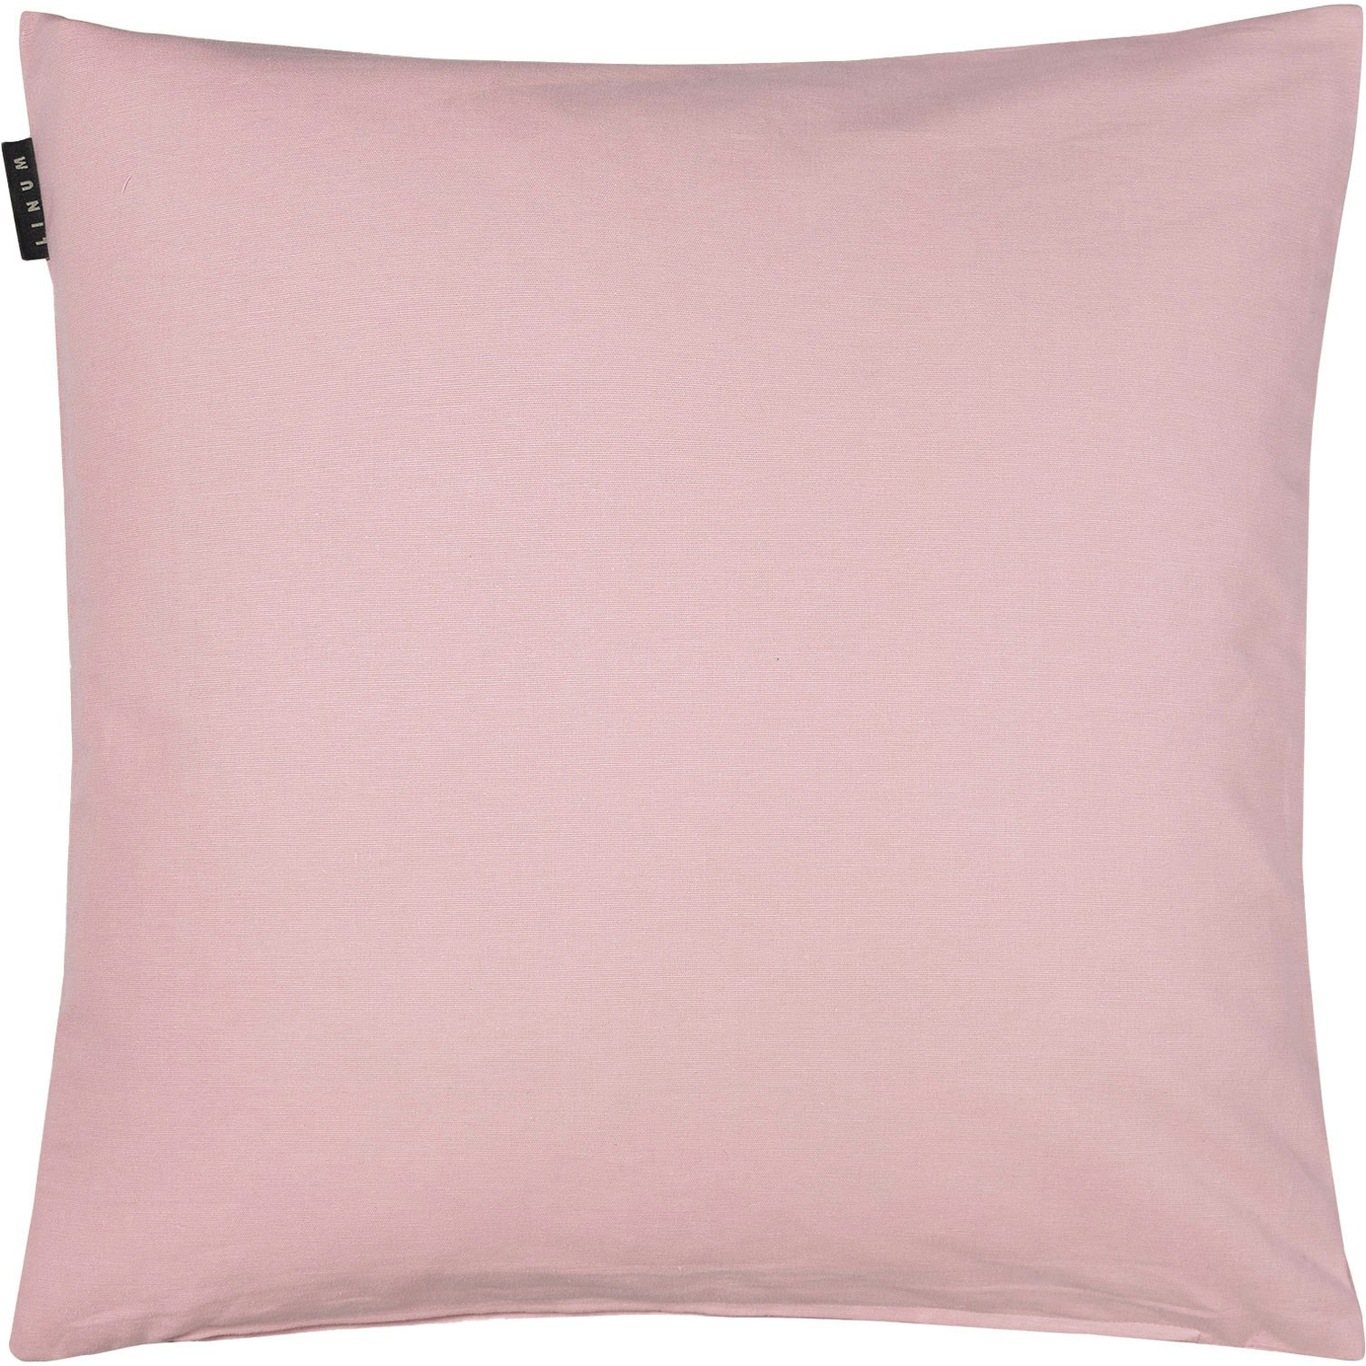 Annabell Kissenbezug 50x50 cm, Dusty Pink